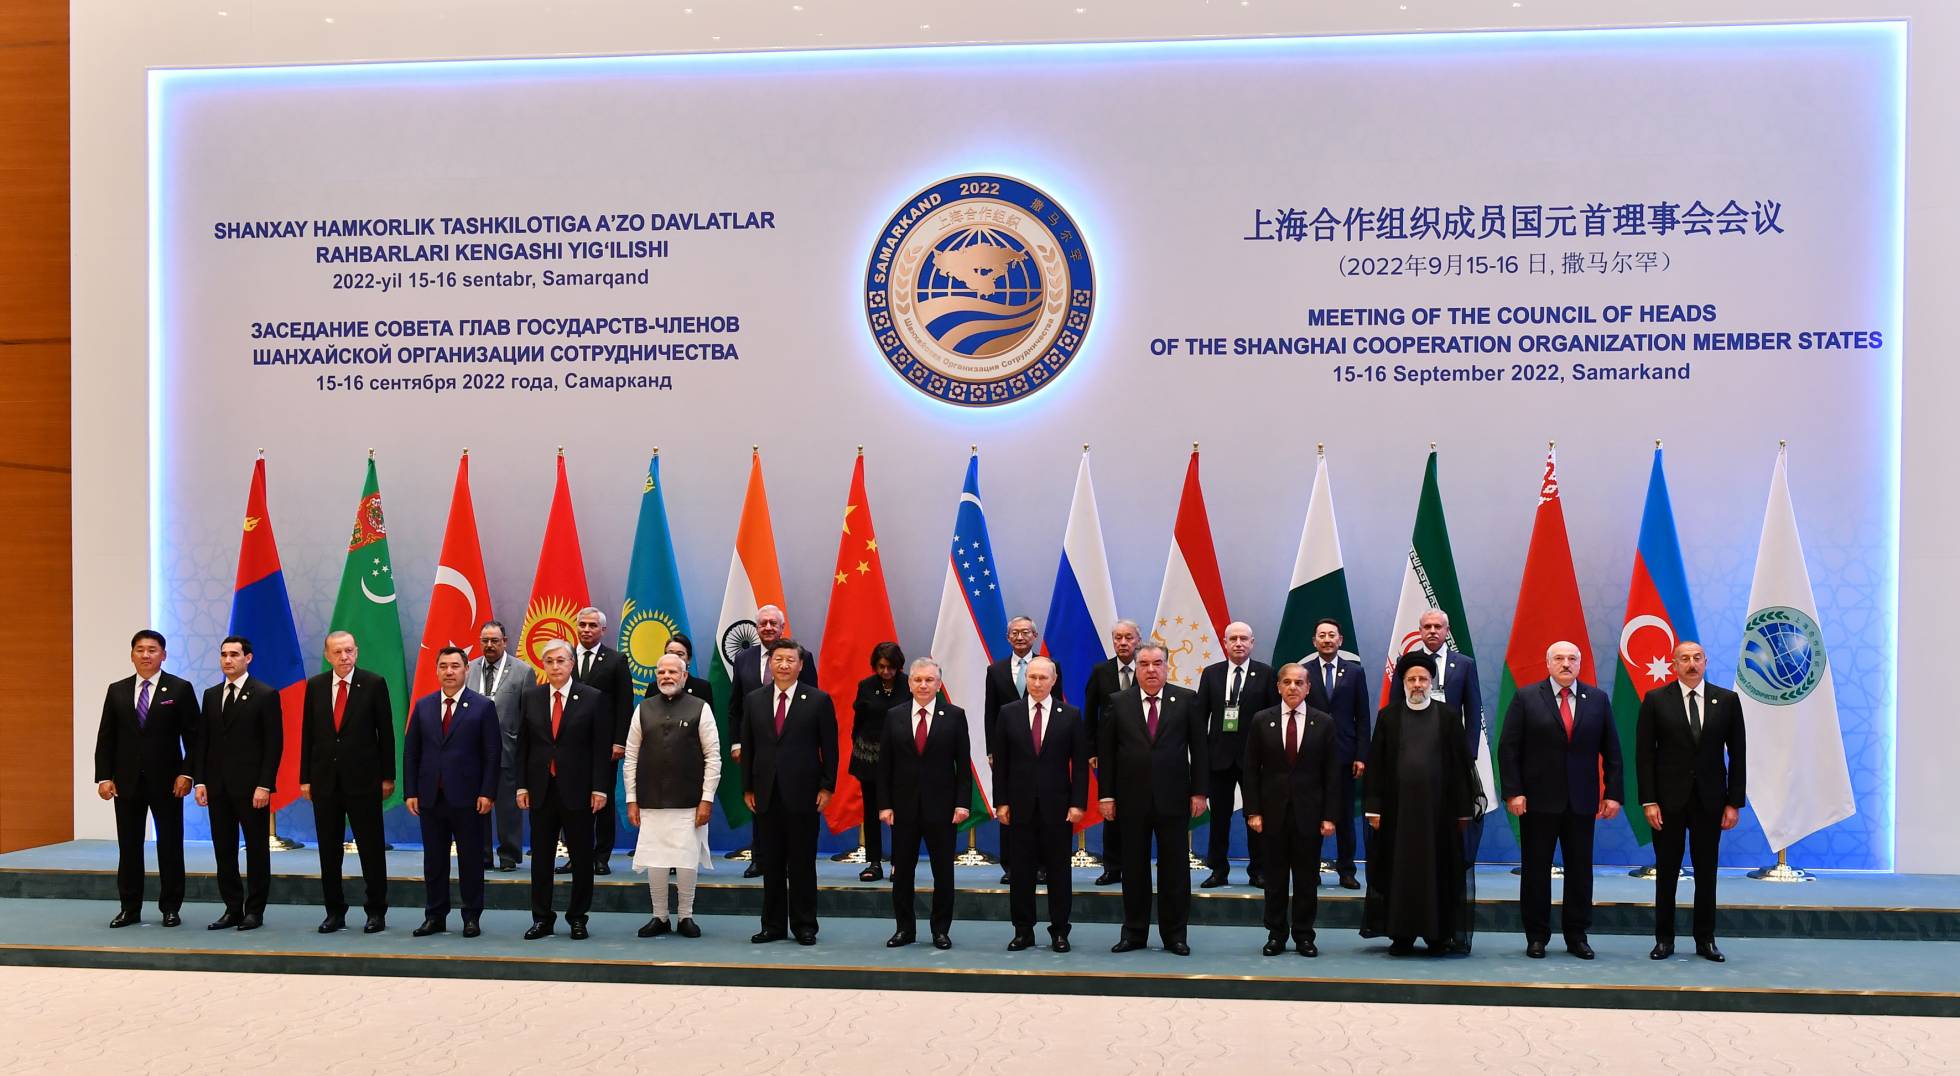 Shanghai Cooperation Organization (SCO)